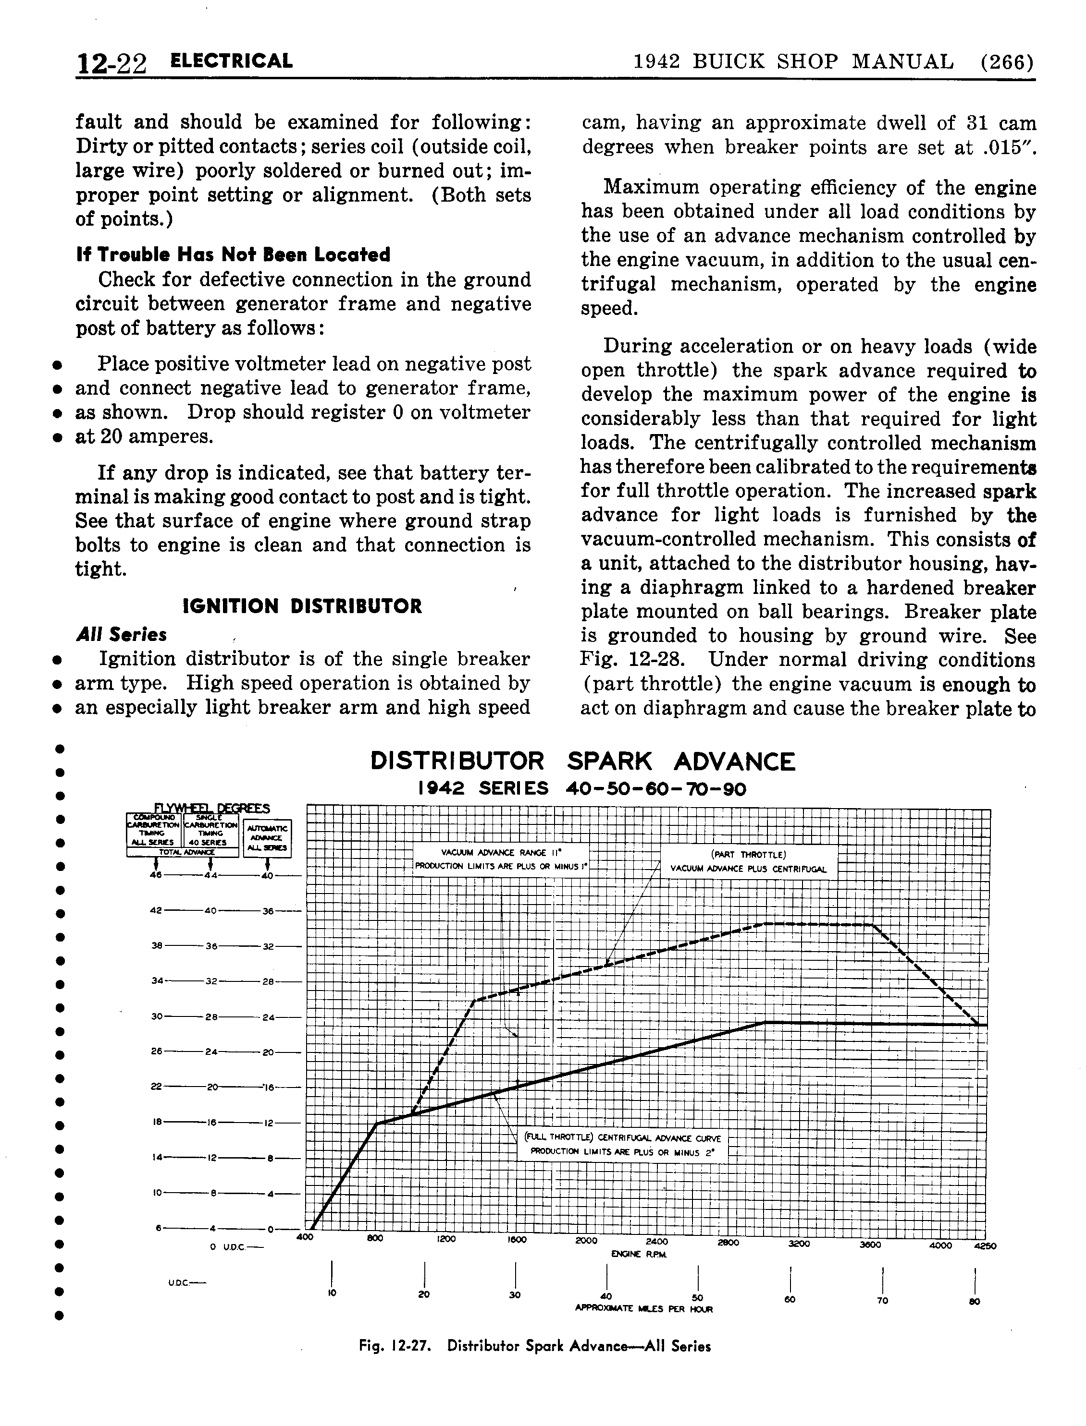 n_13 1942 Buick Shop Manual - Electrical System-022-022.jpg